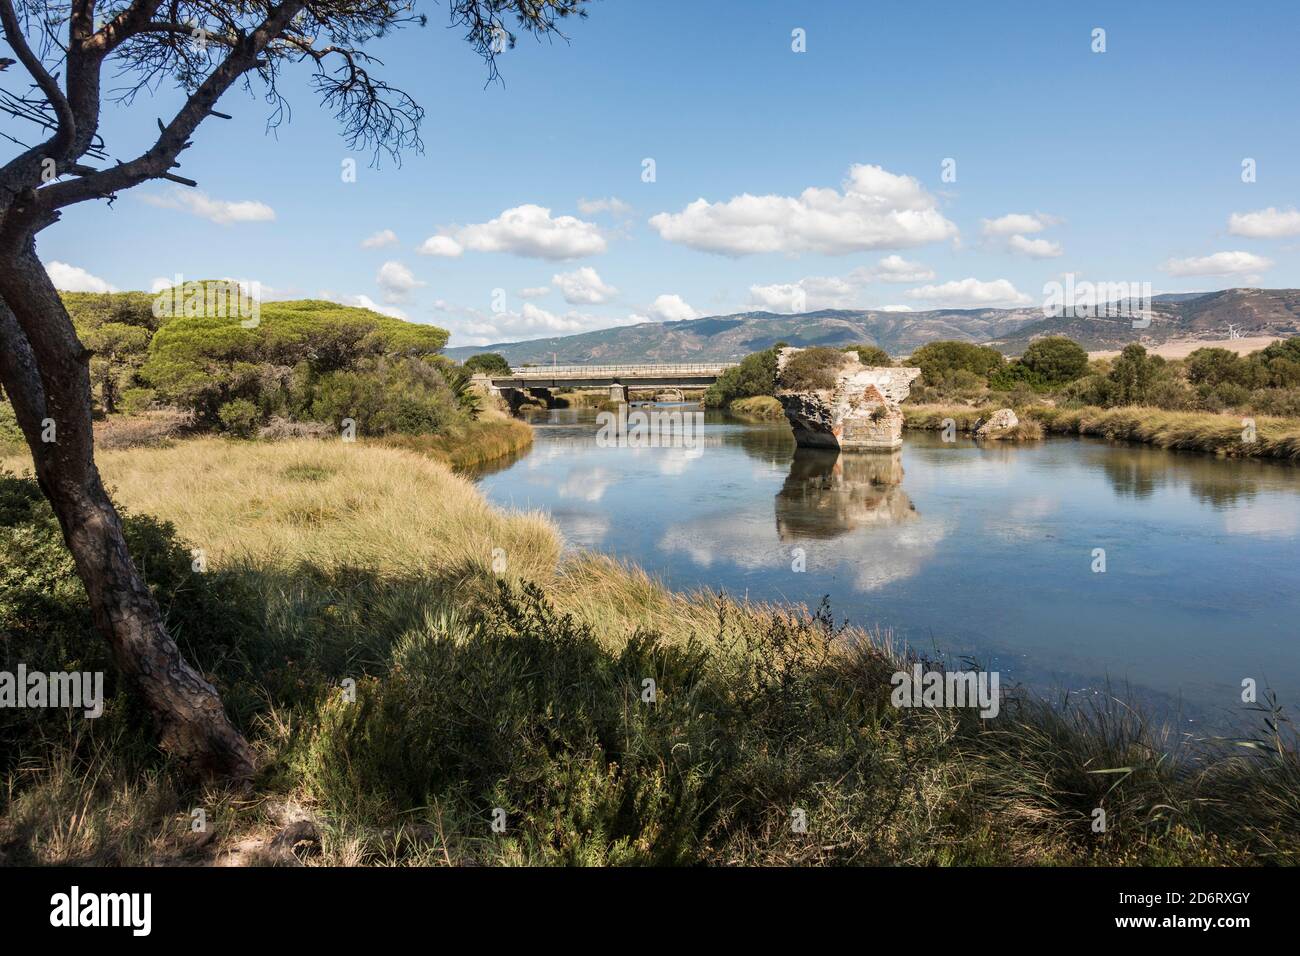 La rivière Jara au parque Natural del estrecho, Playa de los Lances, Cadix, Costa de la Luz, Andalousie, Espagne. Banque D'Images